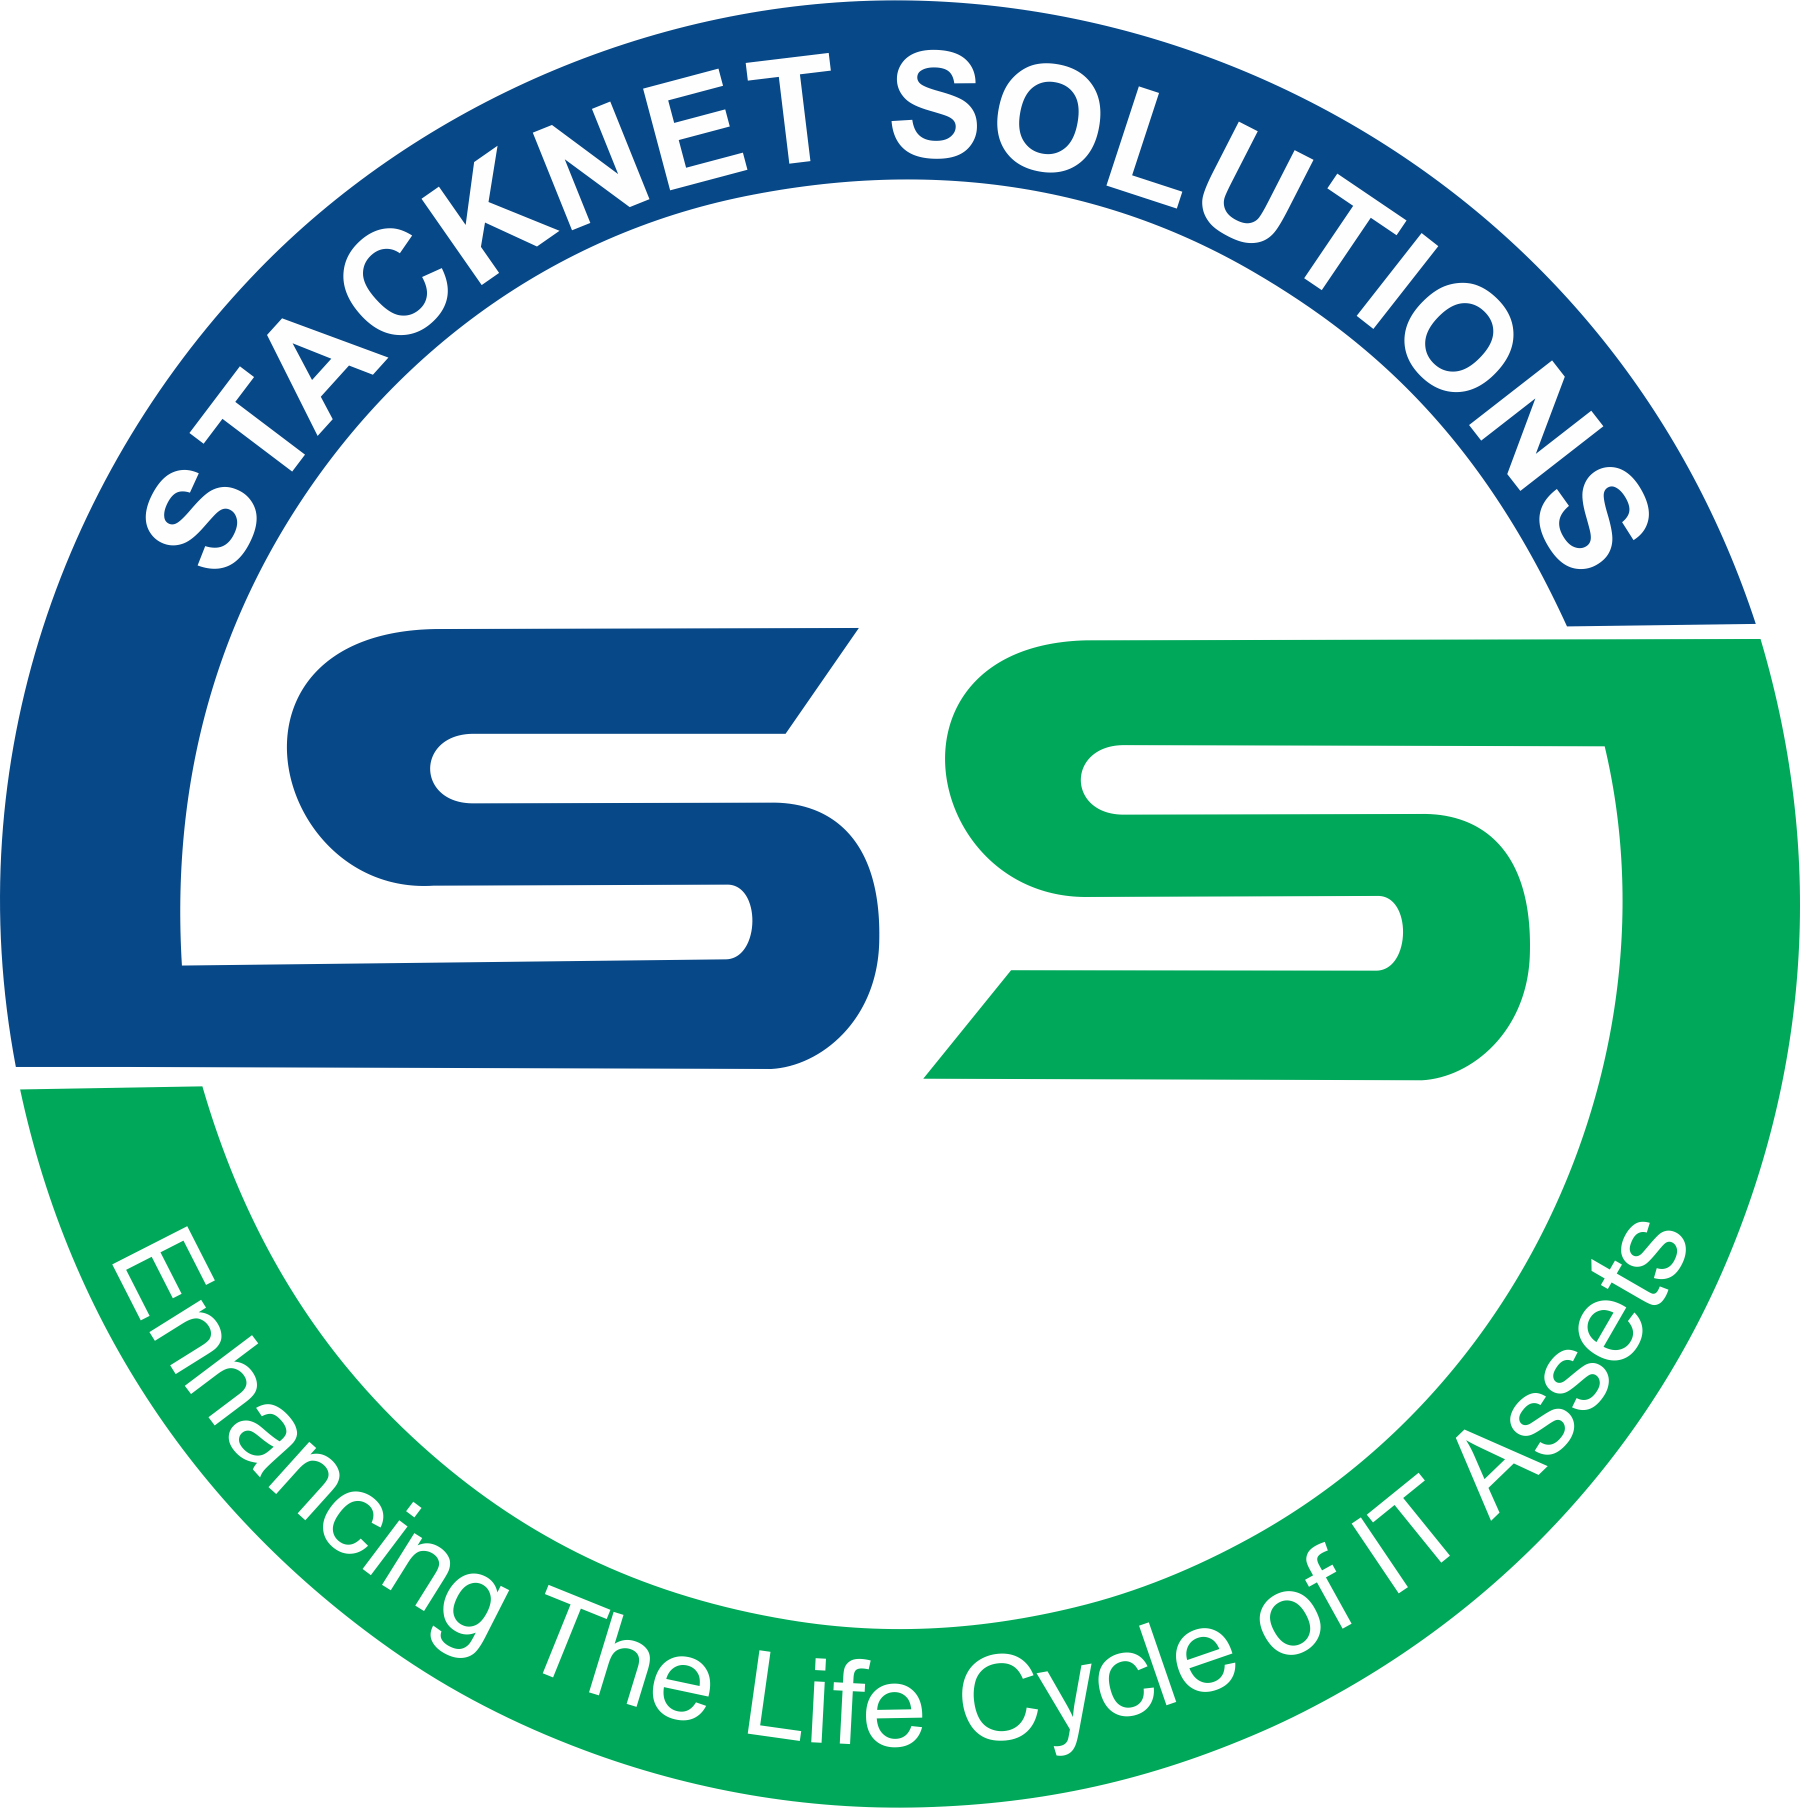 Stacknet Solutions